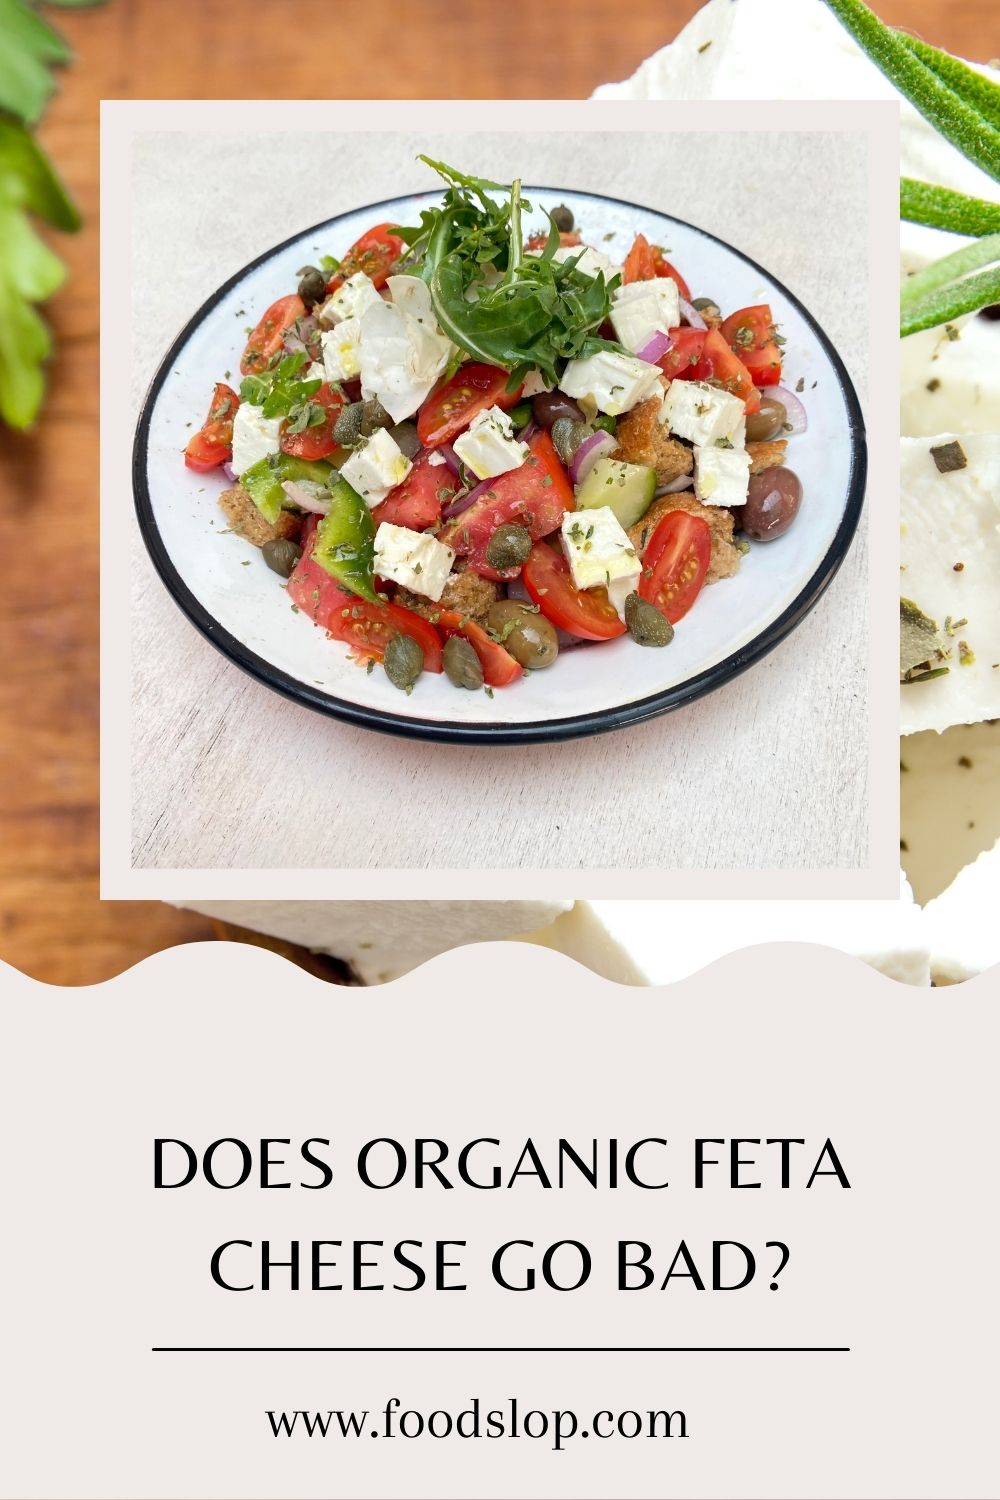 Does Organic Feta Cheese Go Bad?